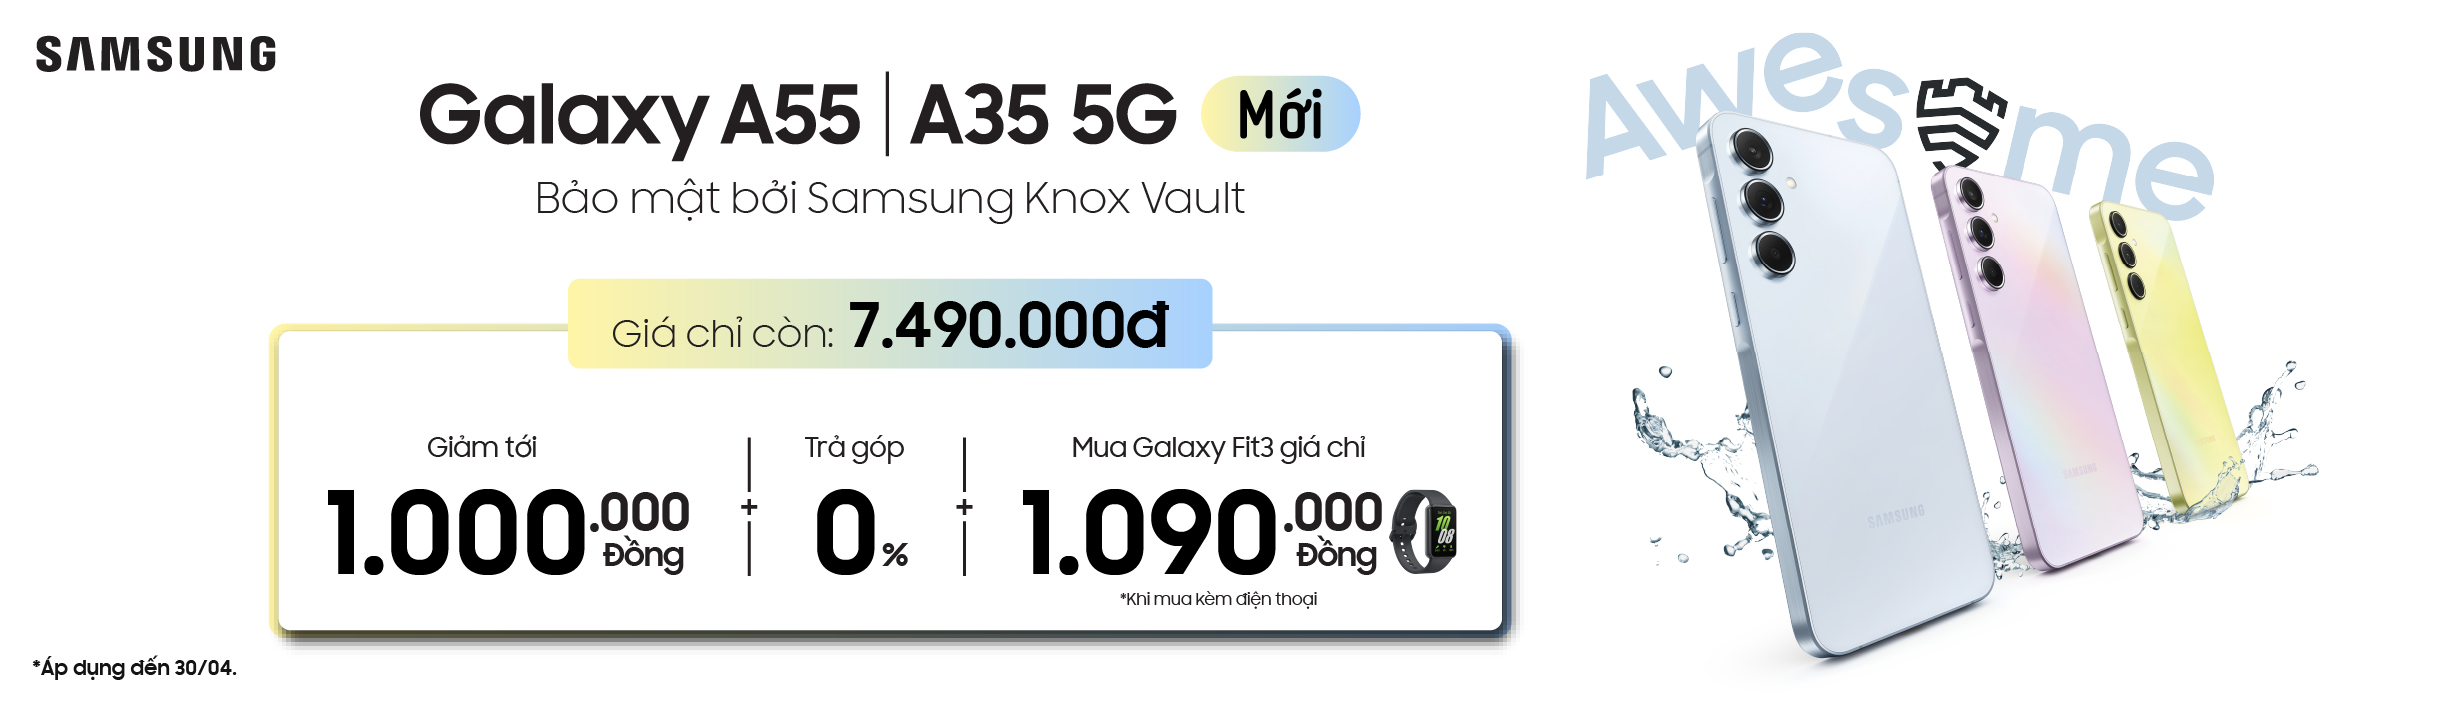 Samsung Galaxy A35 A55